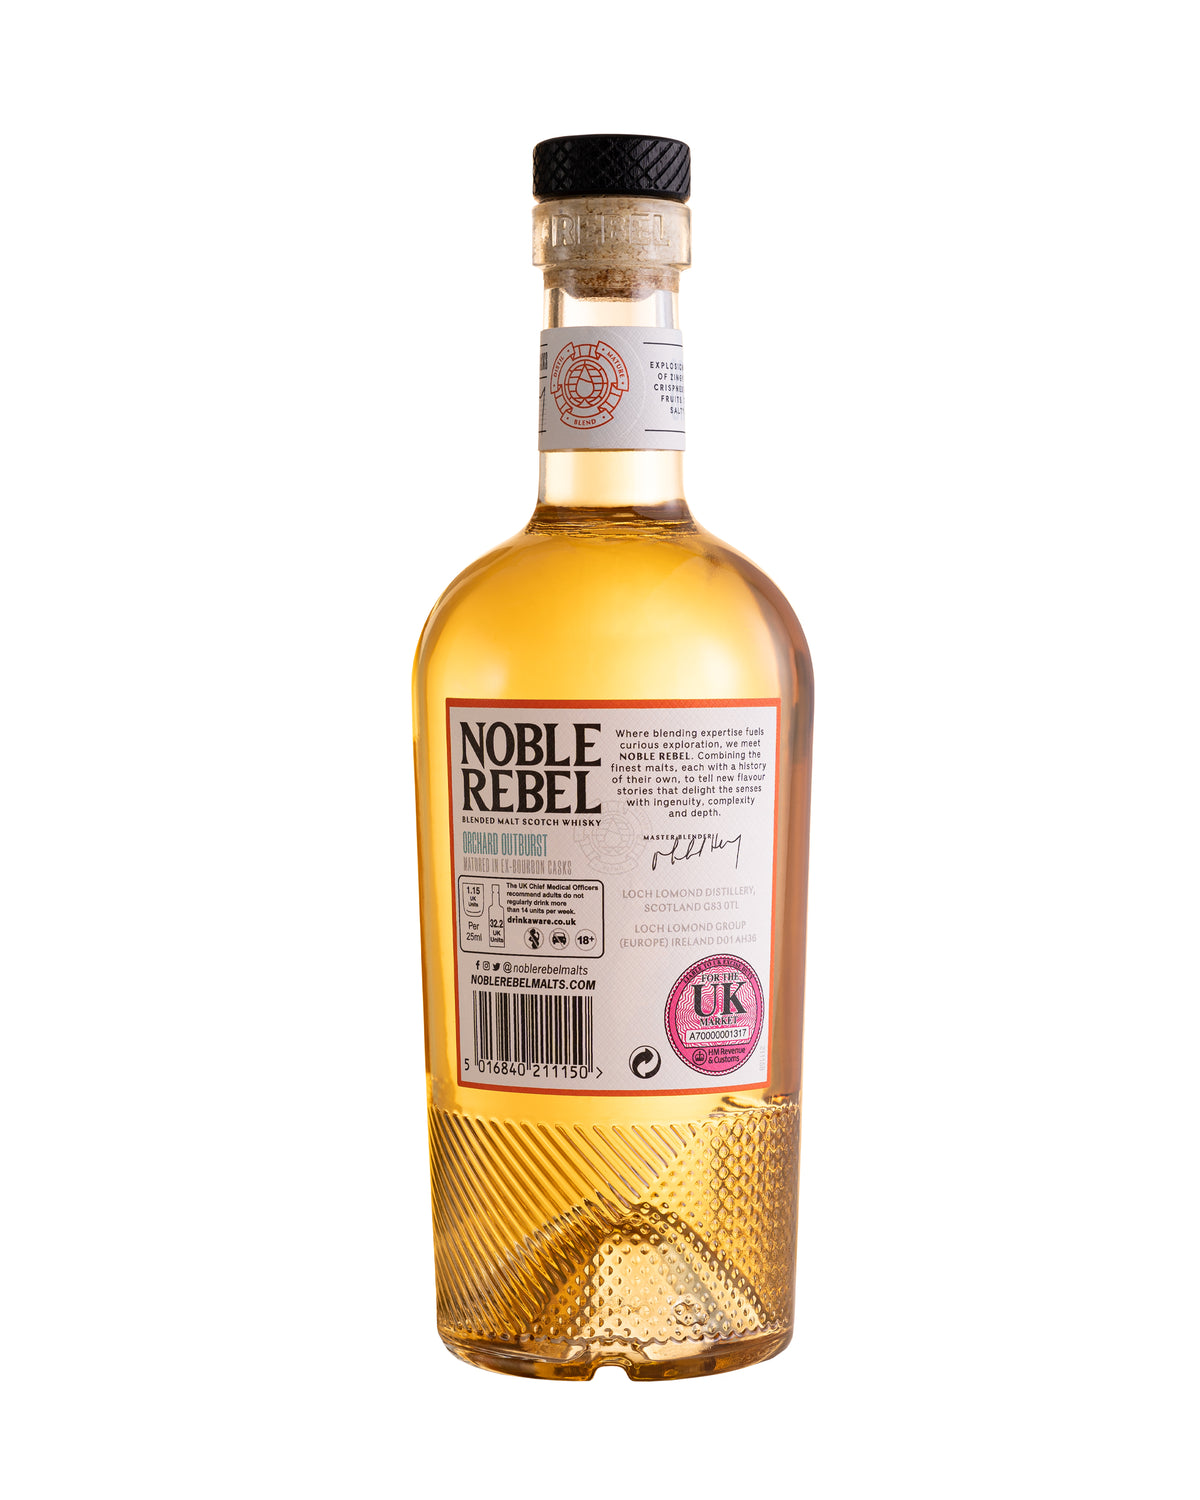 Noble Rebel Whisky - Orchard Outburst